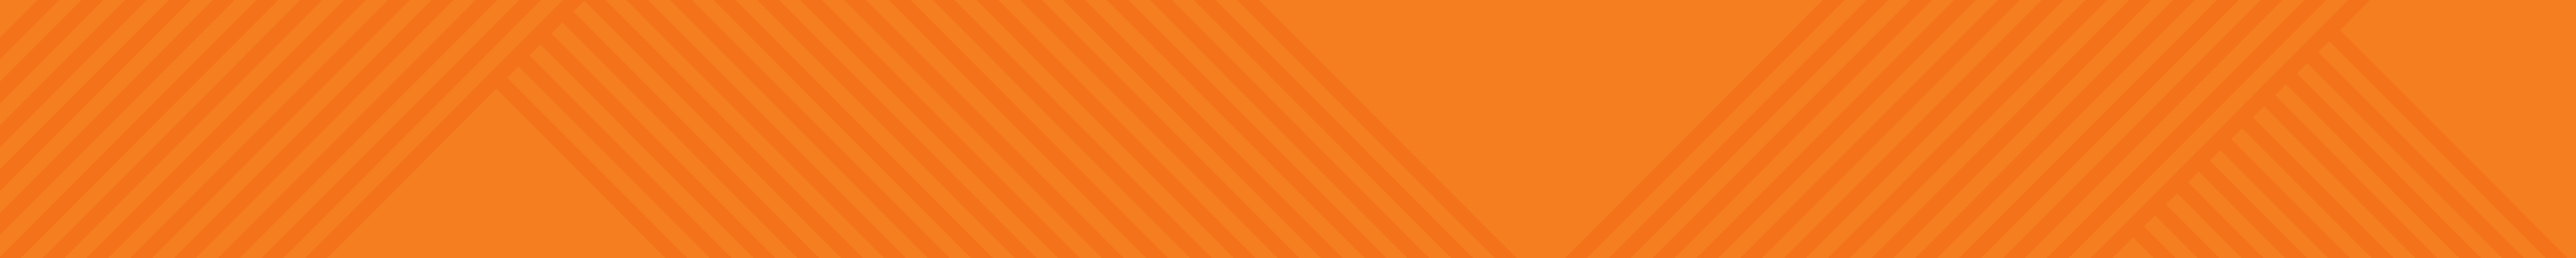 Orange banner graphic with diagonal orange stripes